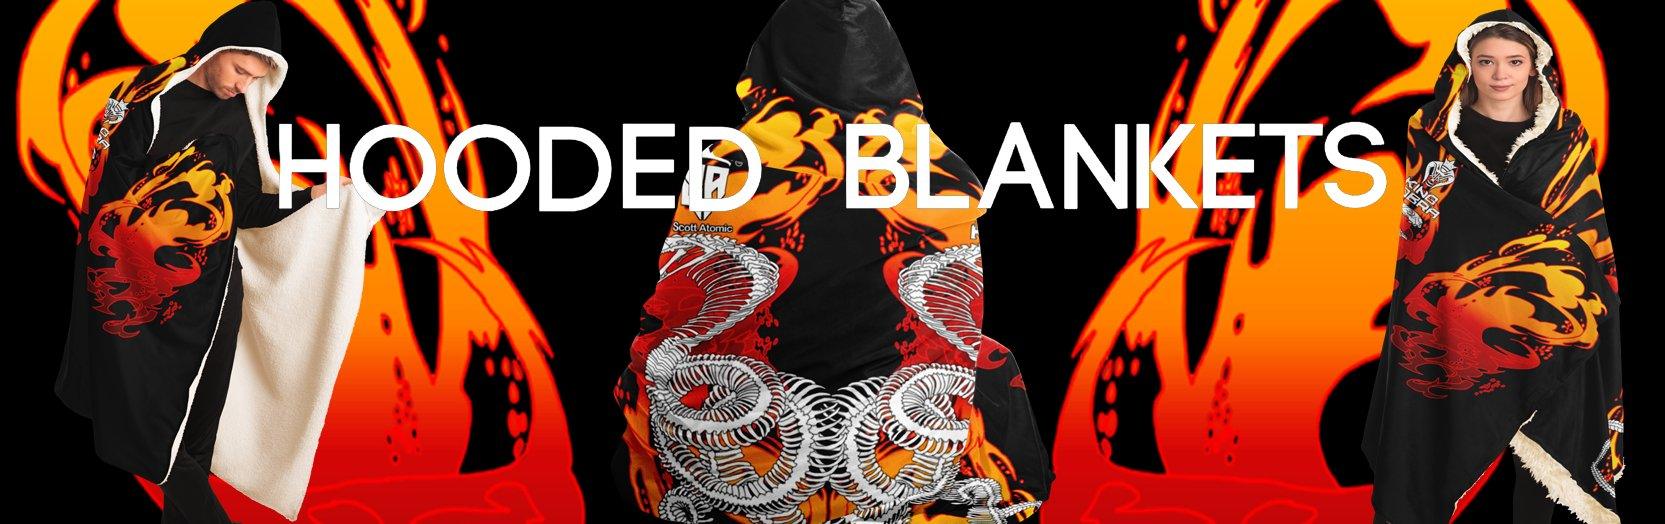 Hooded Blankets - Scott Atomic™ merchandise